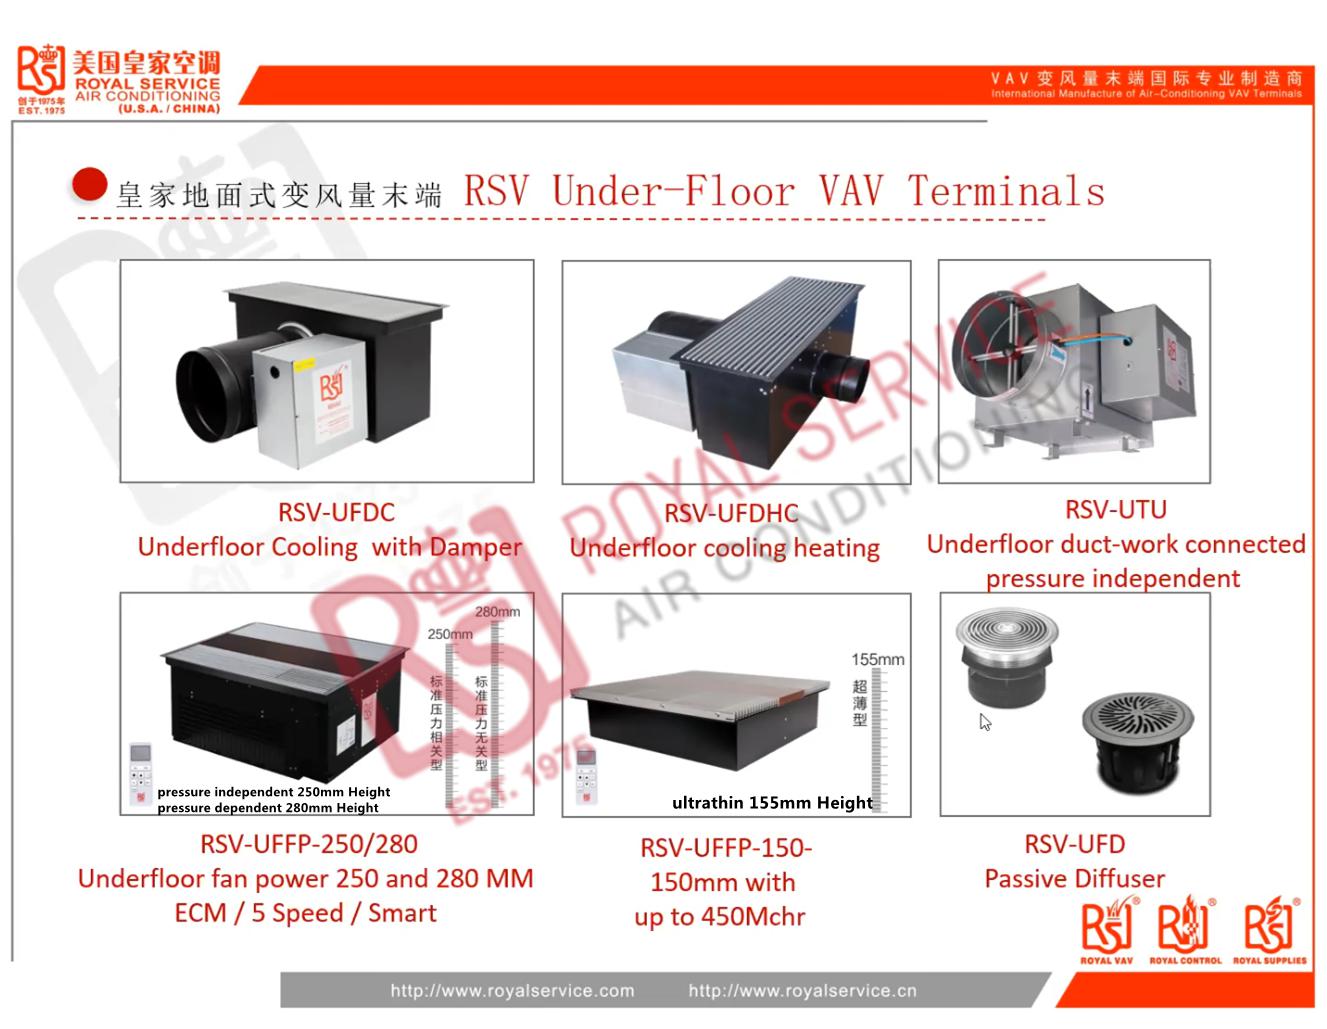 RSV-UFDC Underfloor Single Duct VAV Terminals